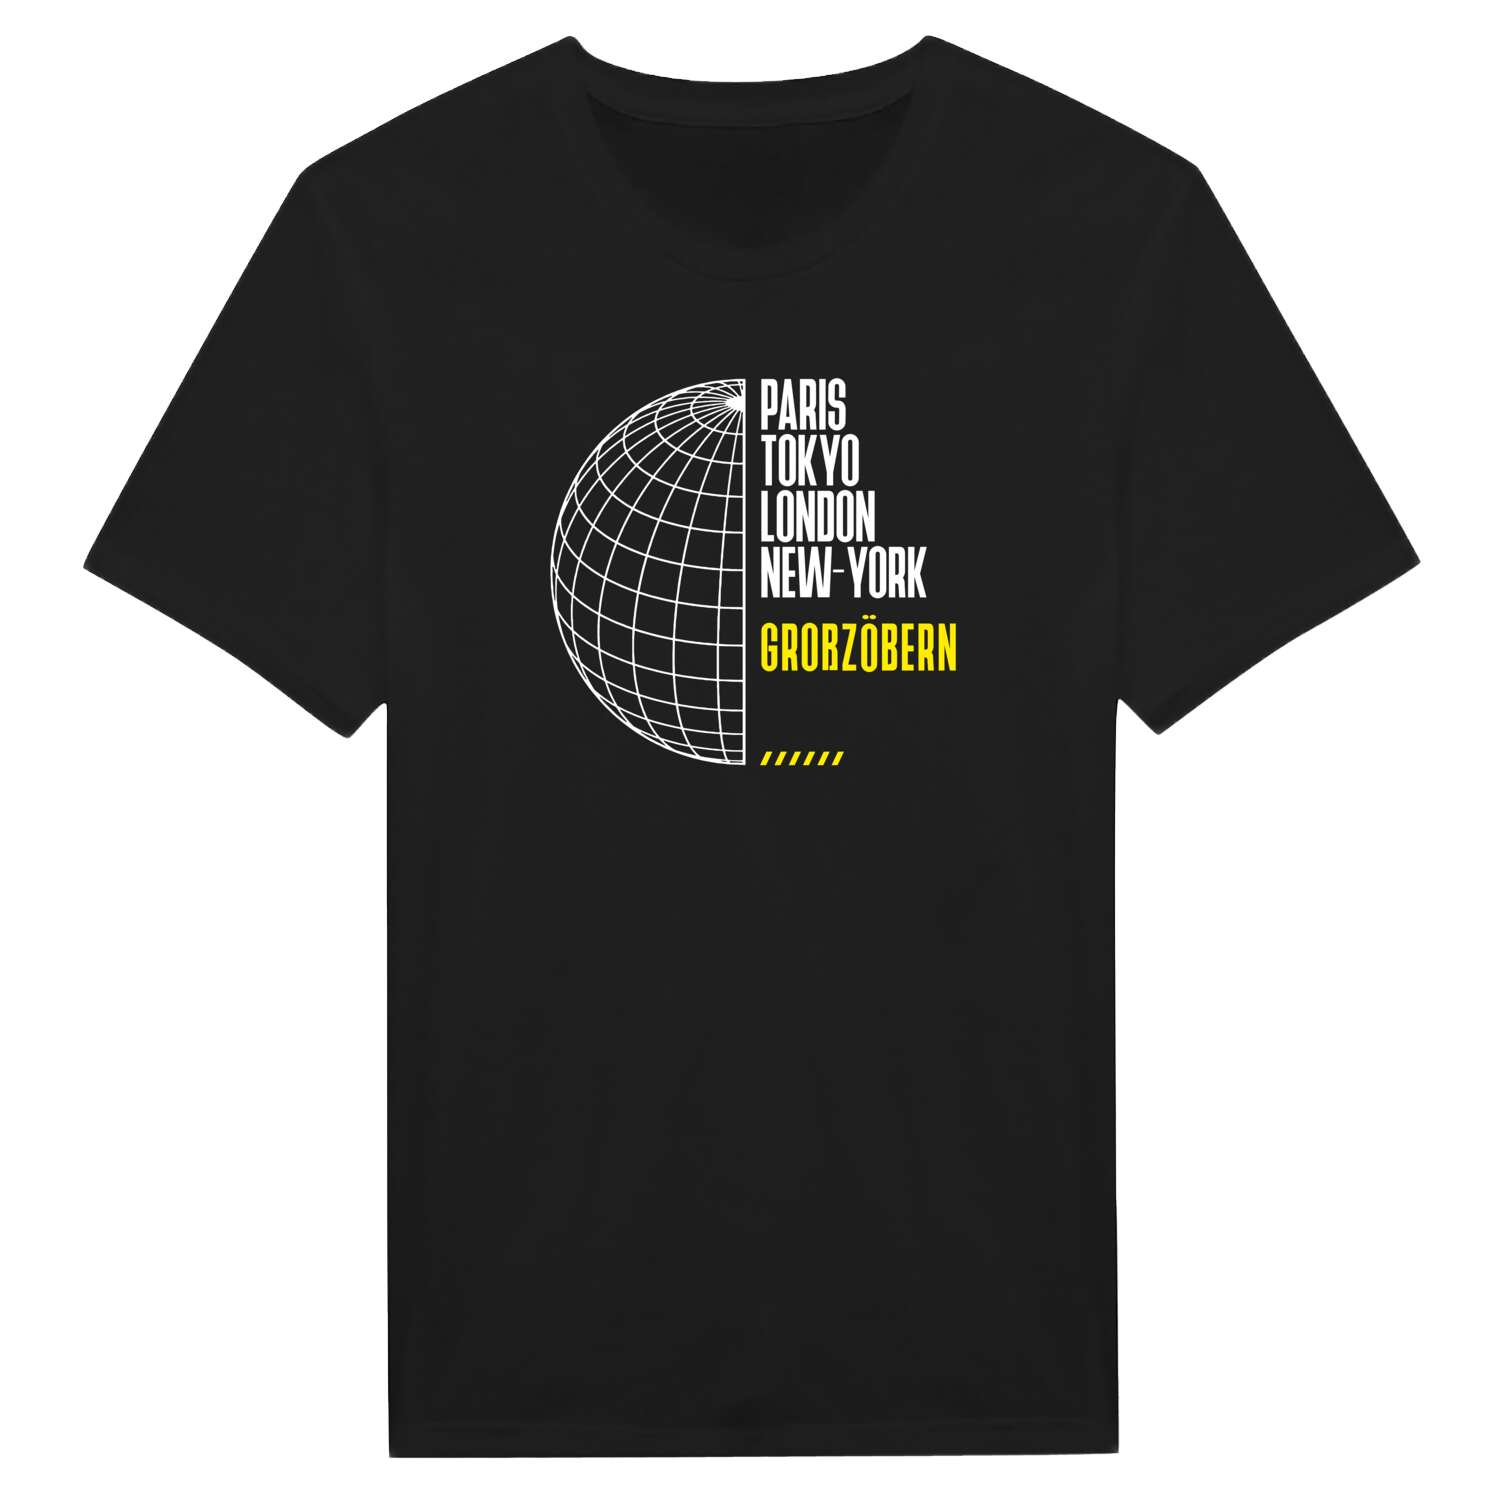 Großzöbern T-Shirt »Paris Tokyo London«